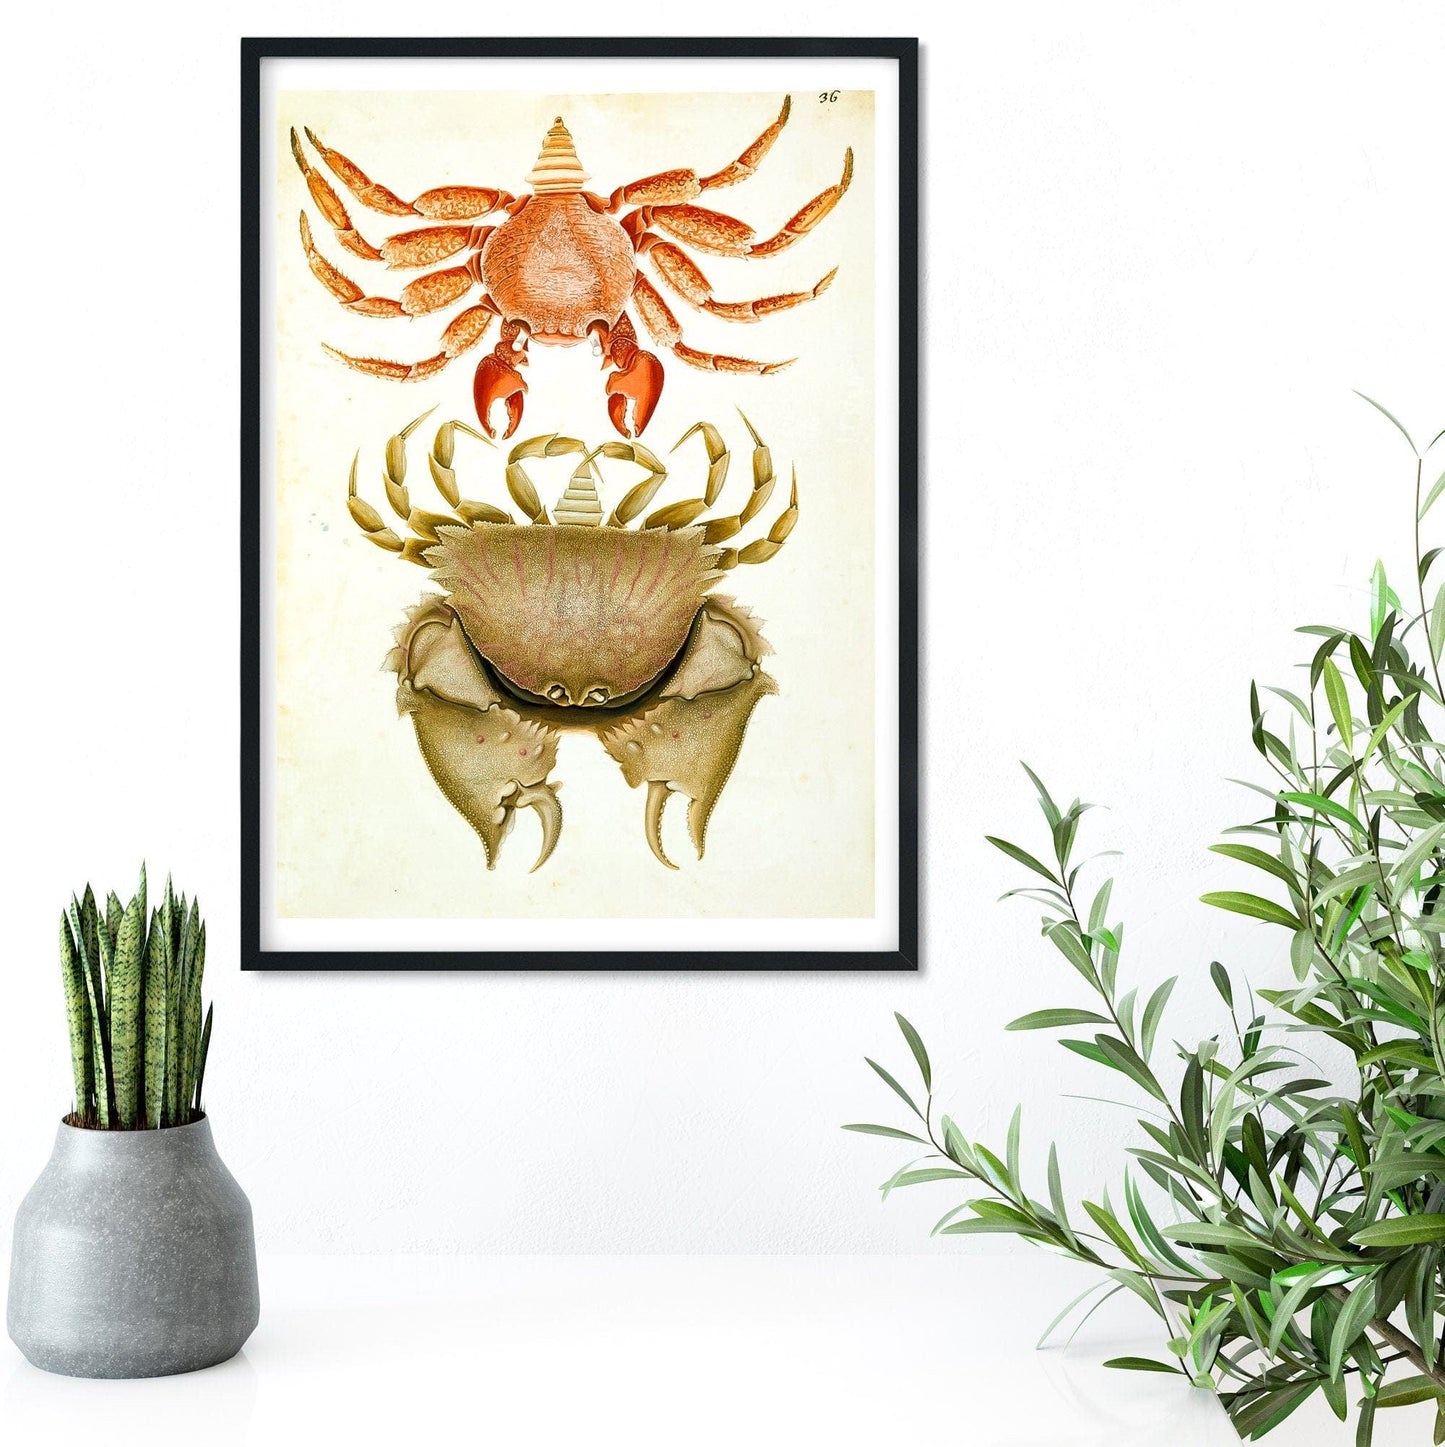 Framed Antique Crab Print, Nature scientific drawing crab illustration poster